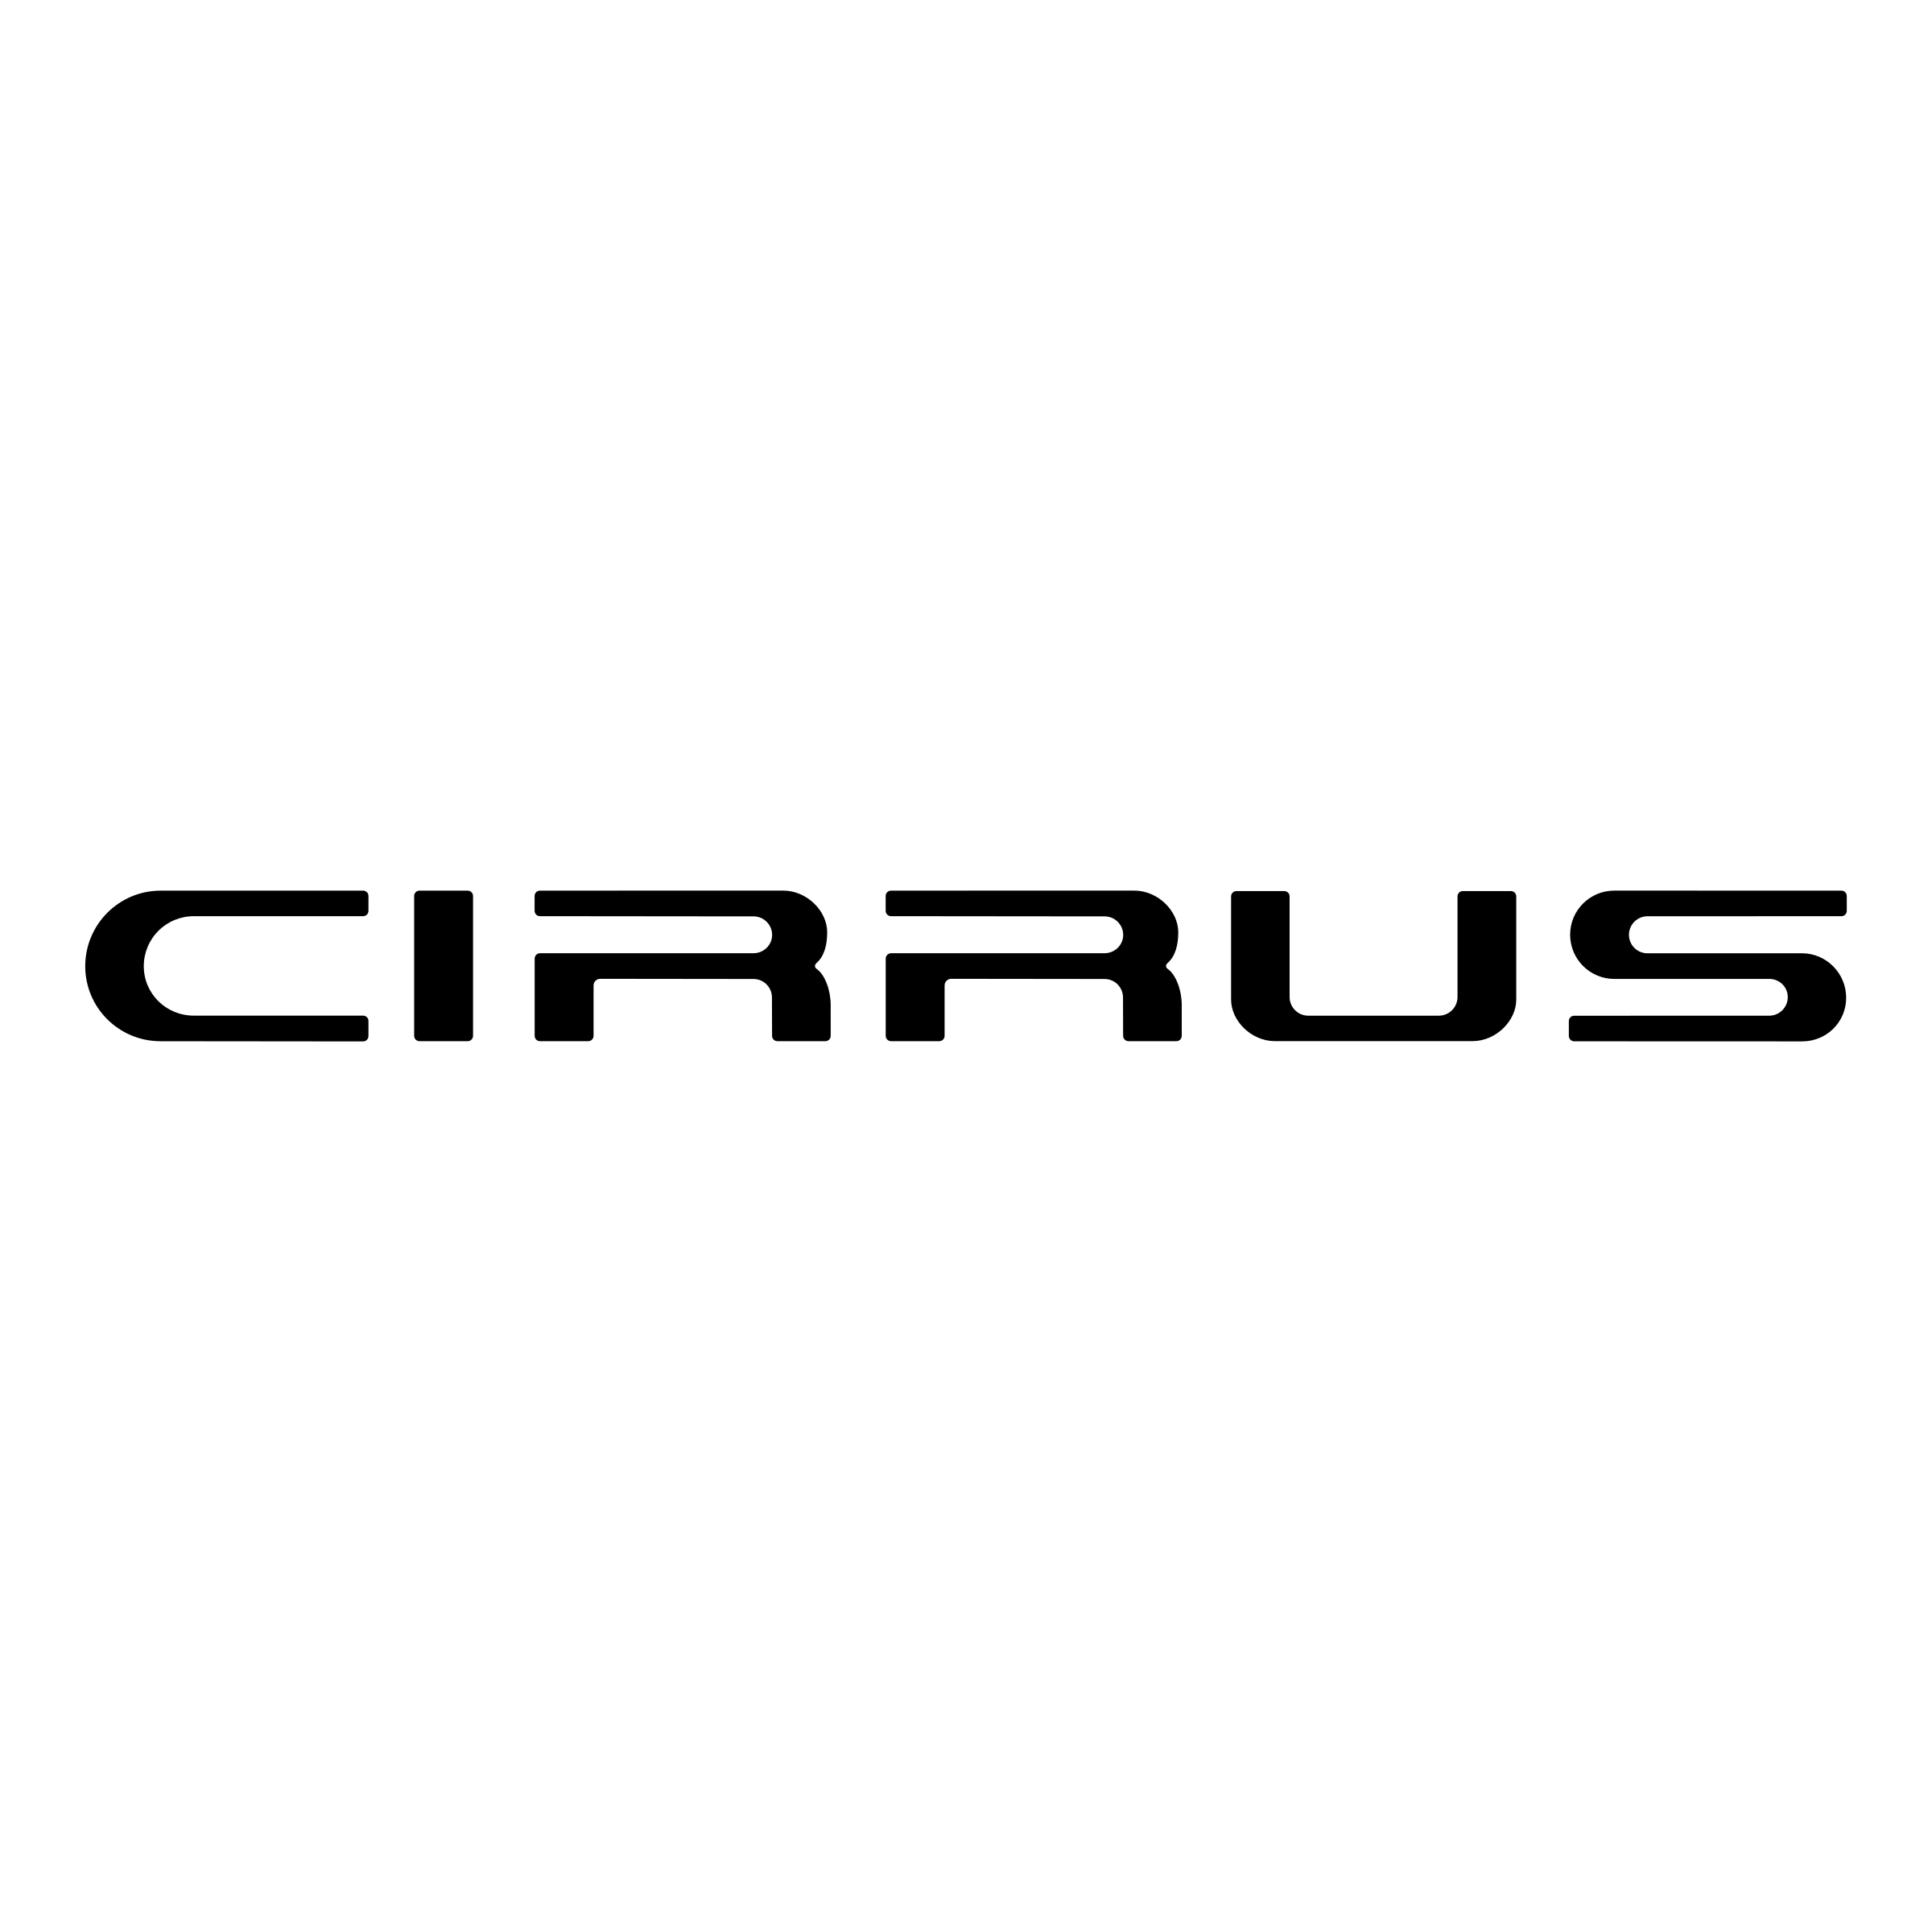 Cirrus Logo - Cirrus Logo PNG Transparent & SVG Vector